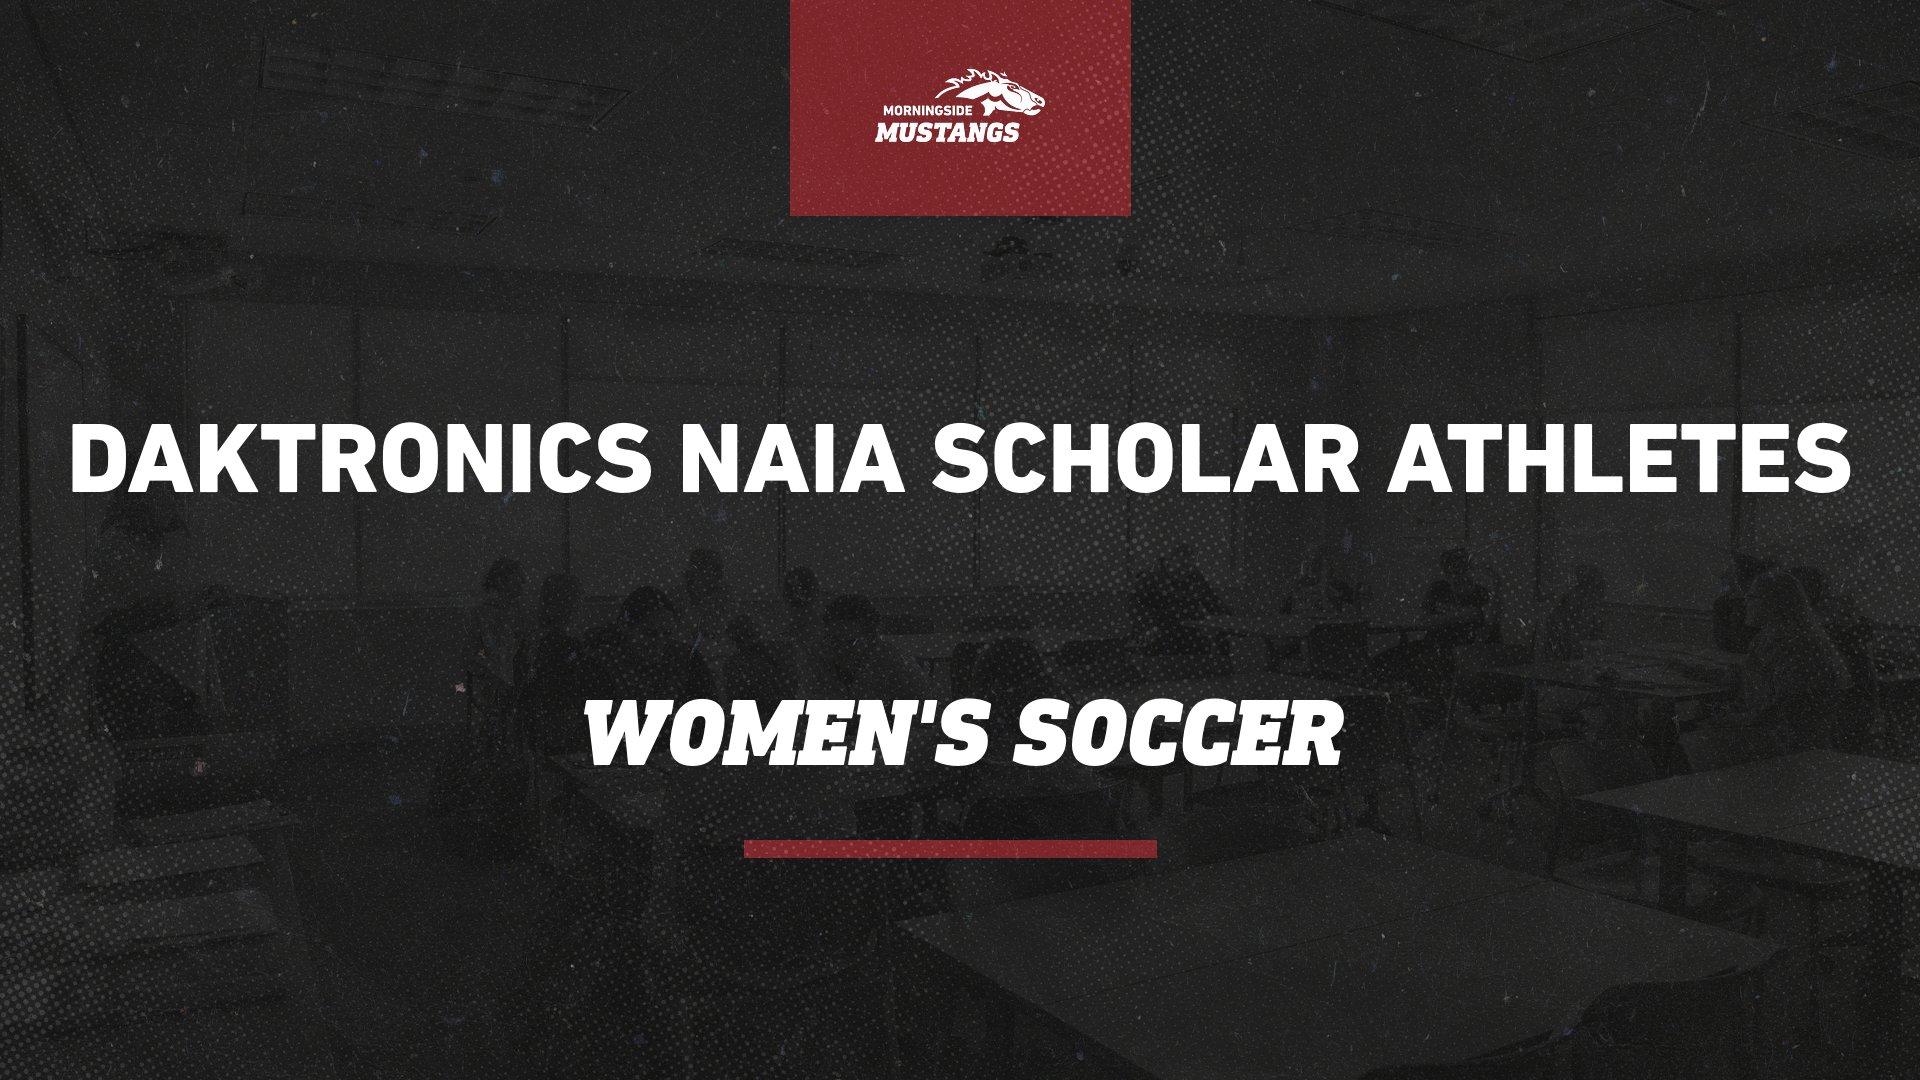 Daktronics NAIA Scholar Athletes for Women's Soccer